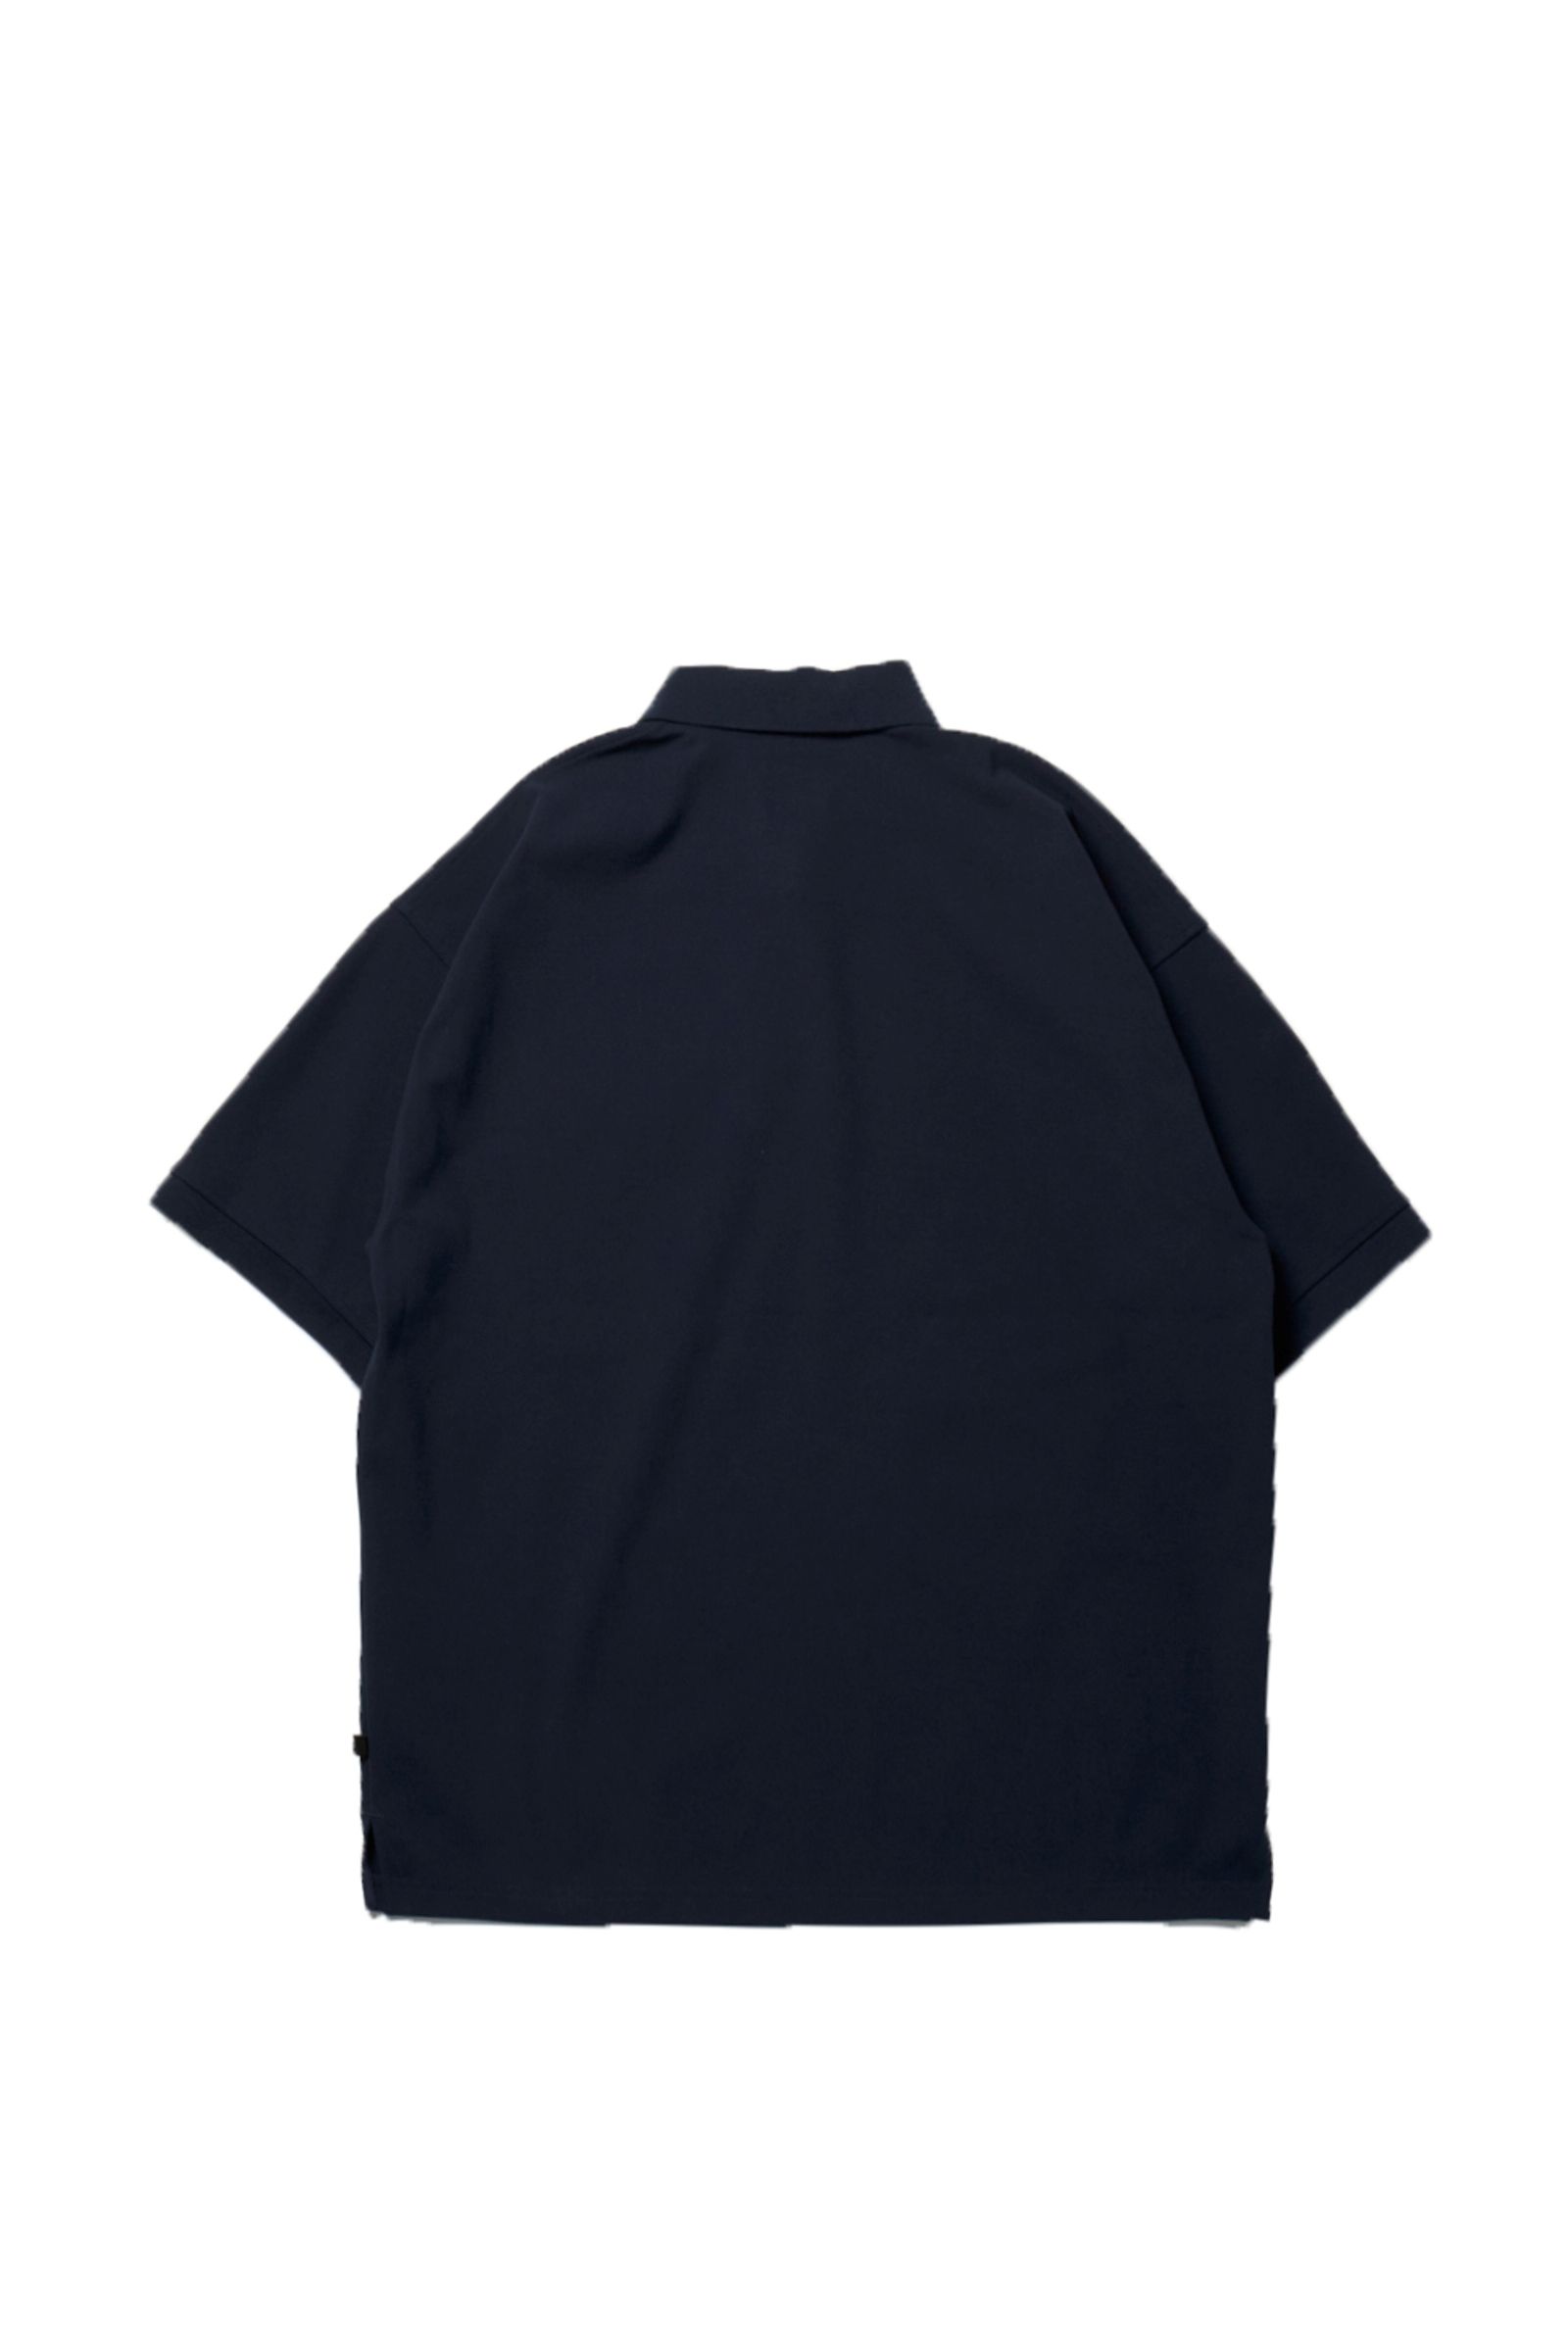 DAIWA PIER39 - tech polo shirts s/s-dark navy-23ss men | asterisk